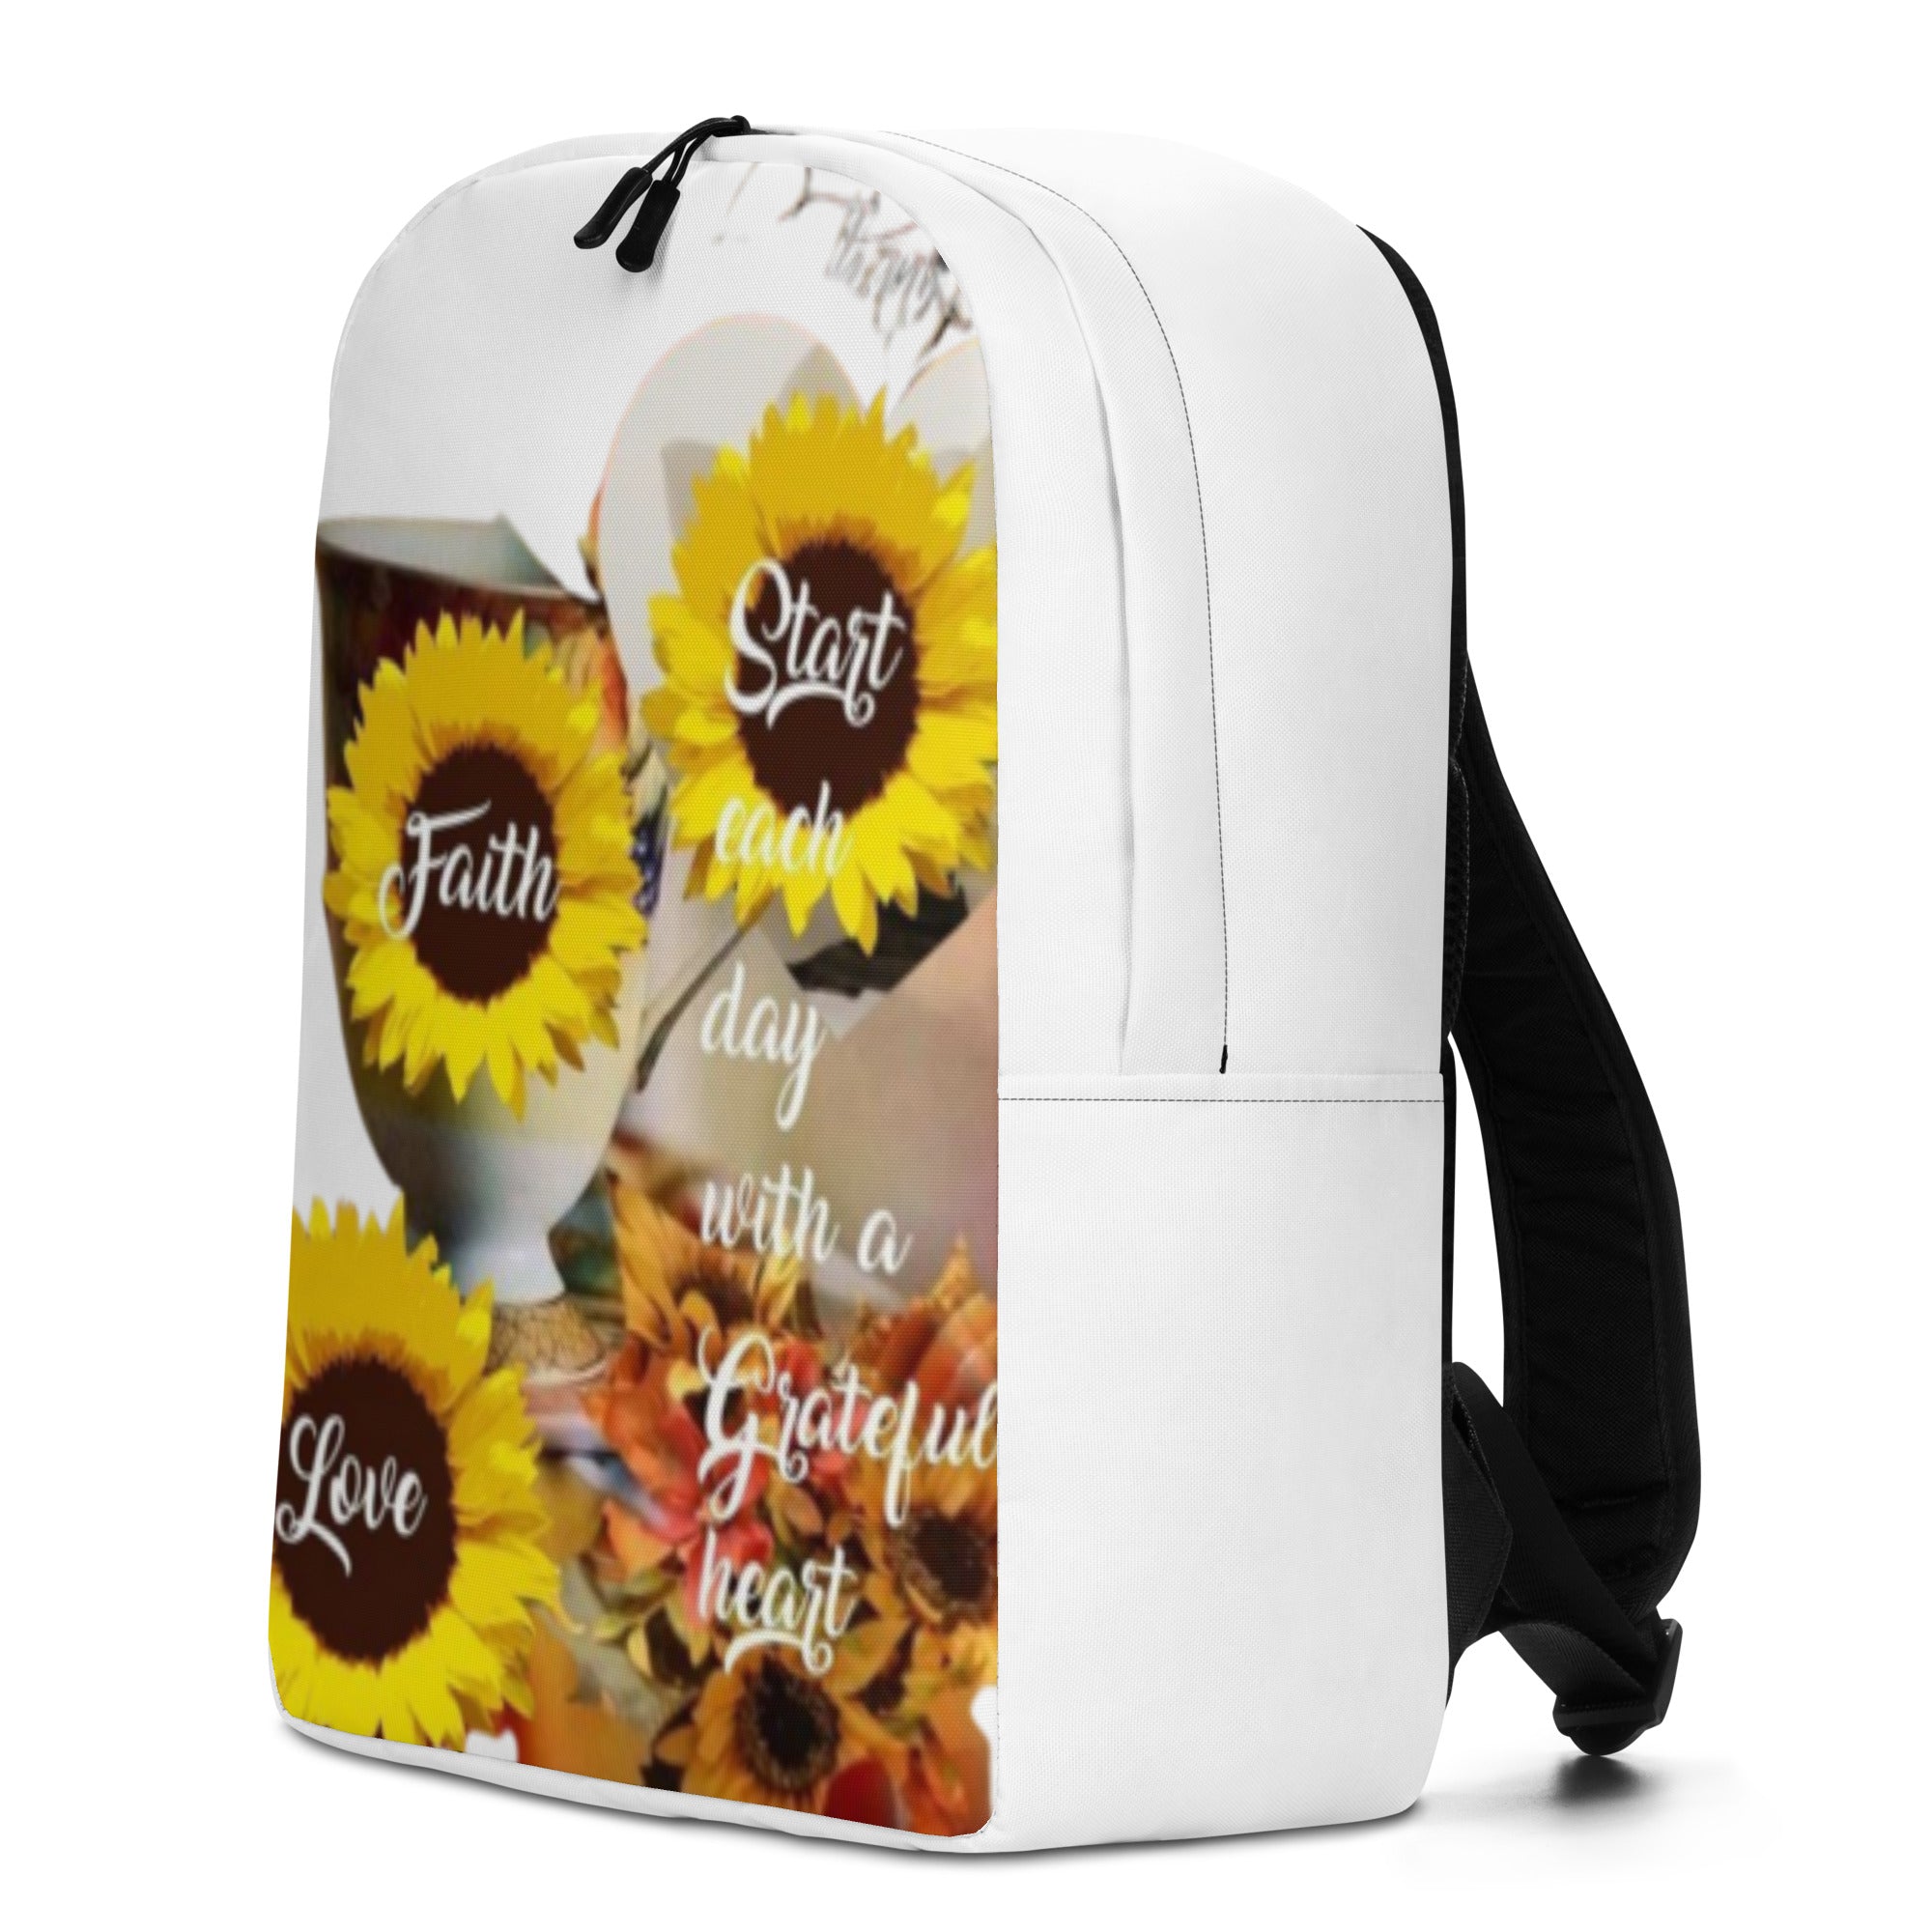 Buy Grateful Heart Minimalist Backpack - Stylish and Functional Backpacks